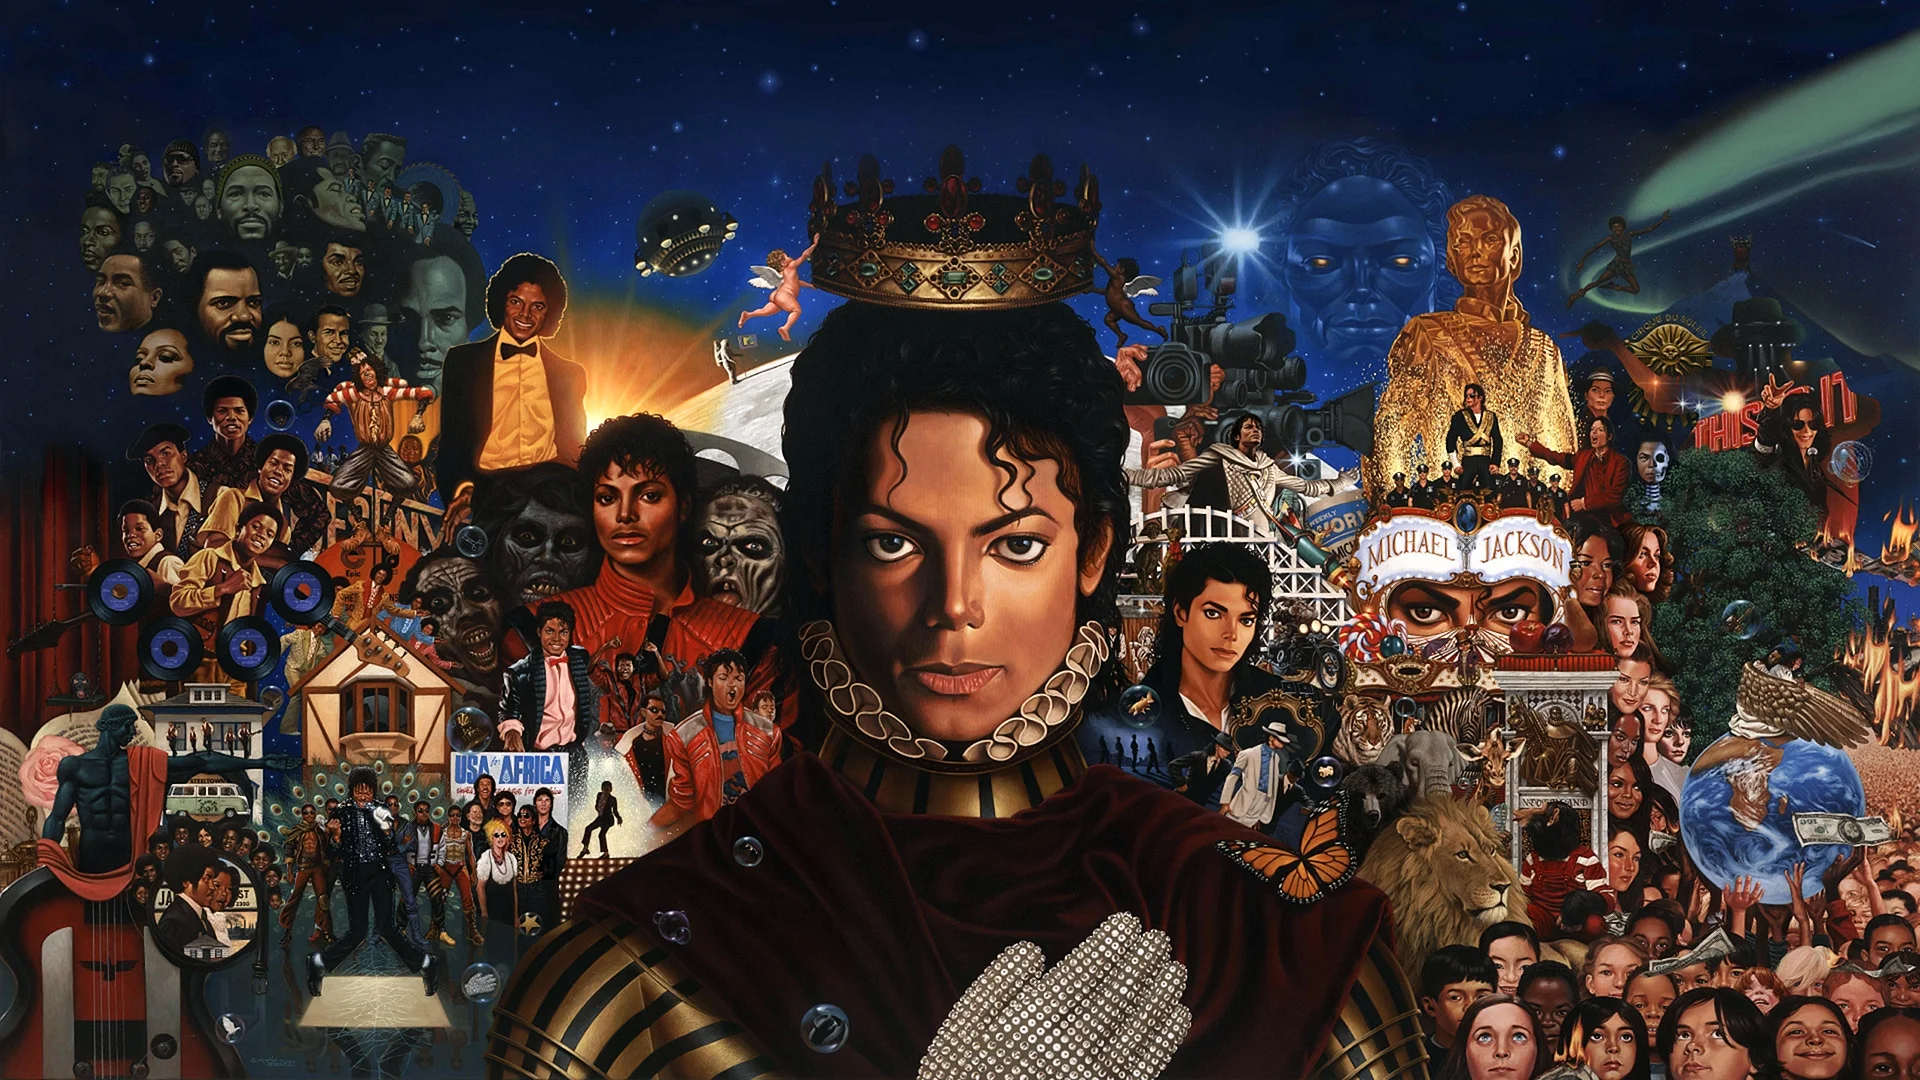 Michael Jackson Dangerous Wallpaper